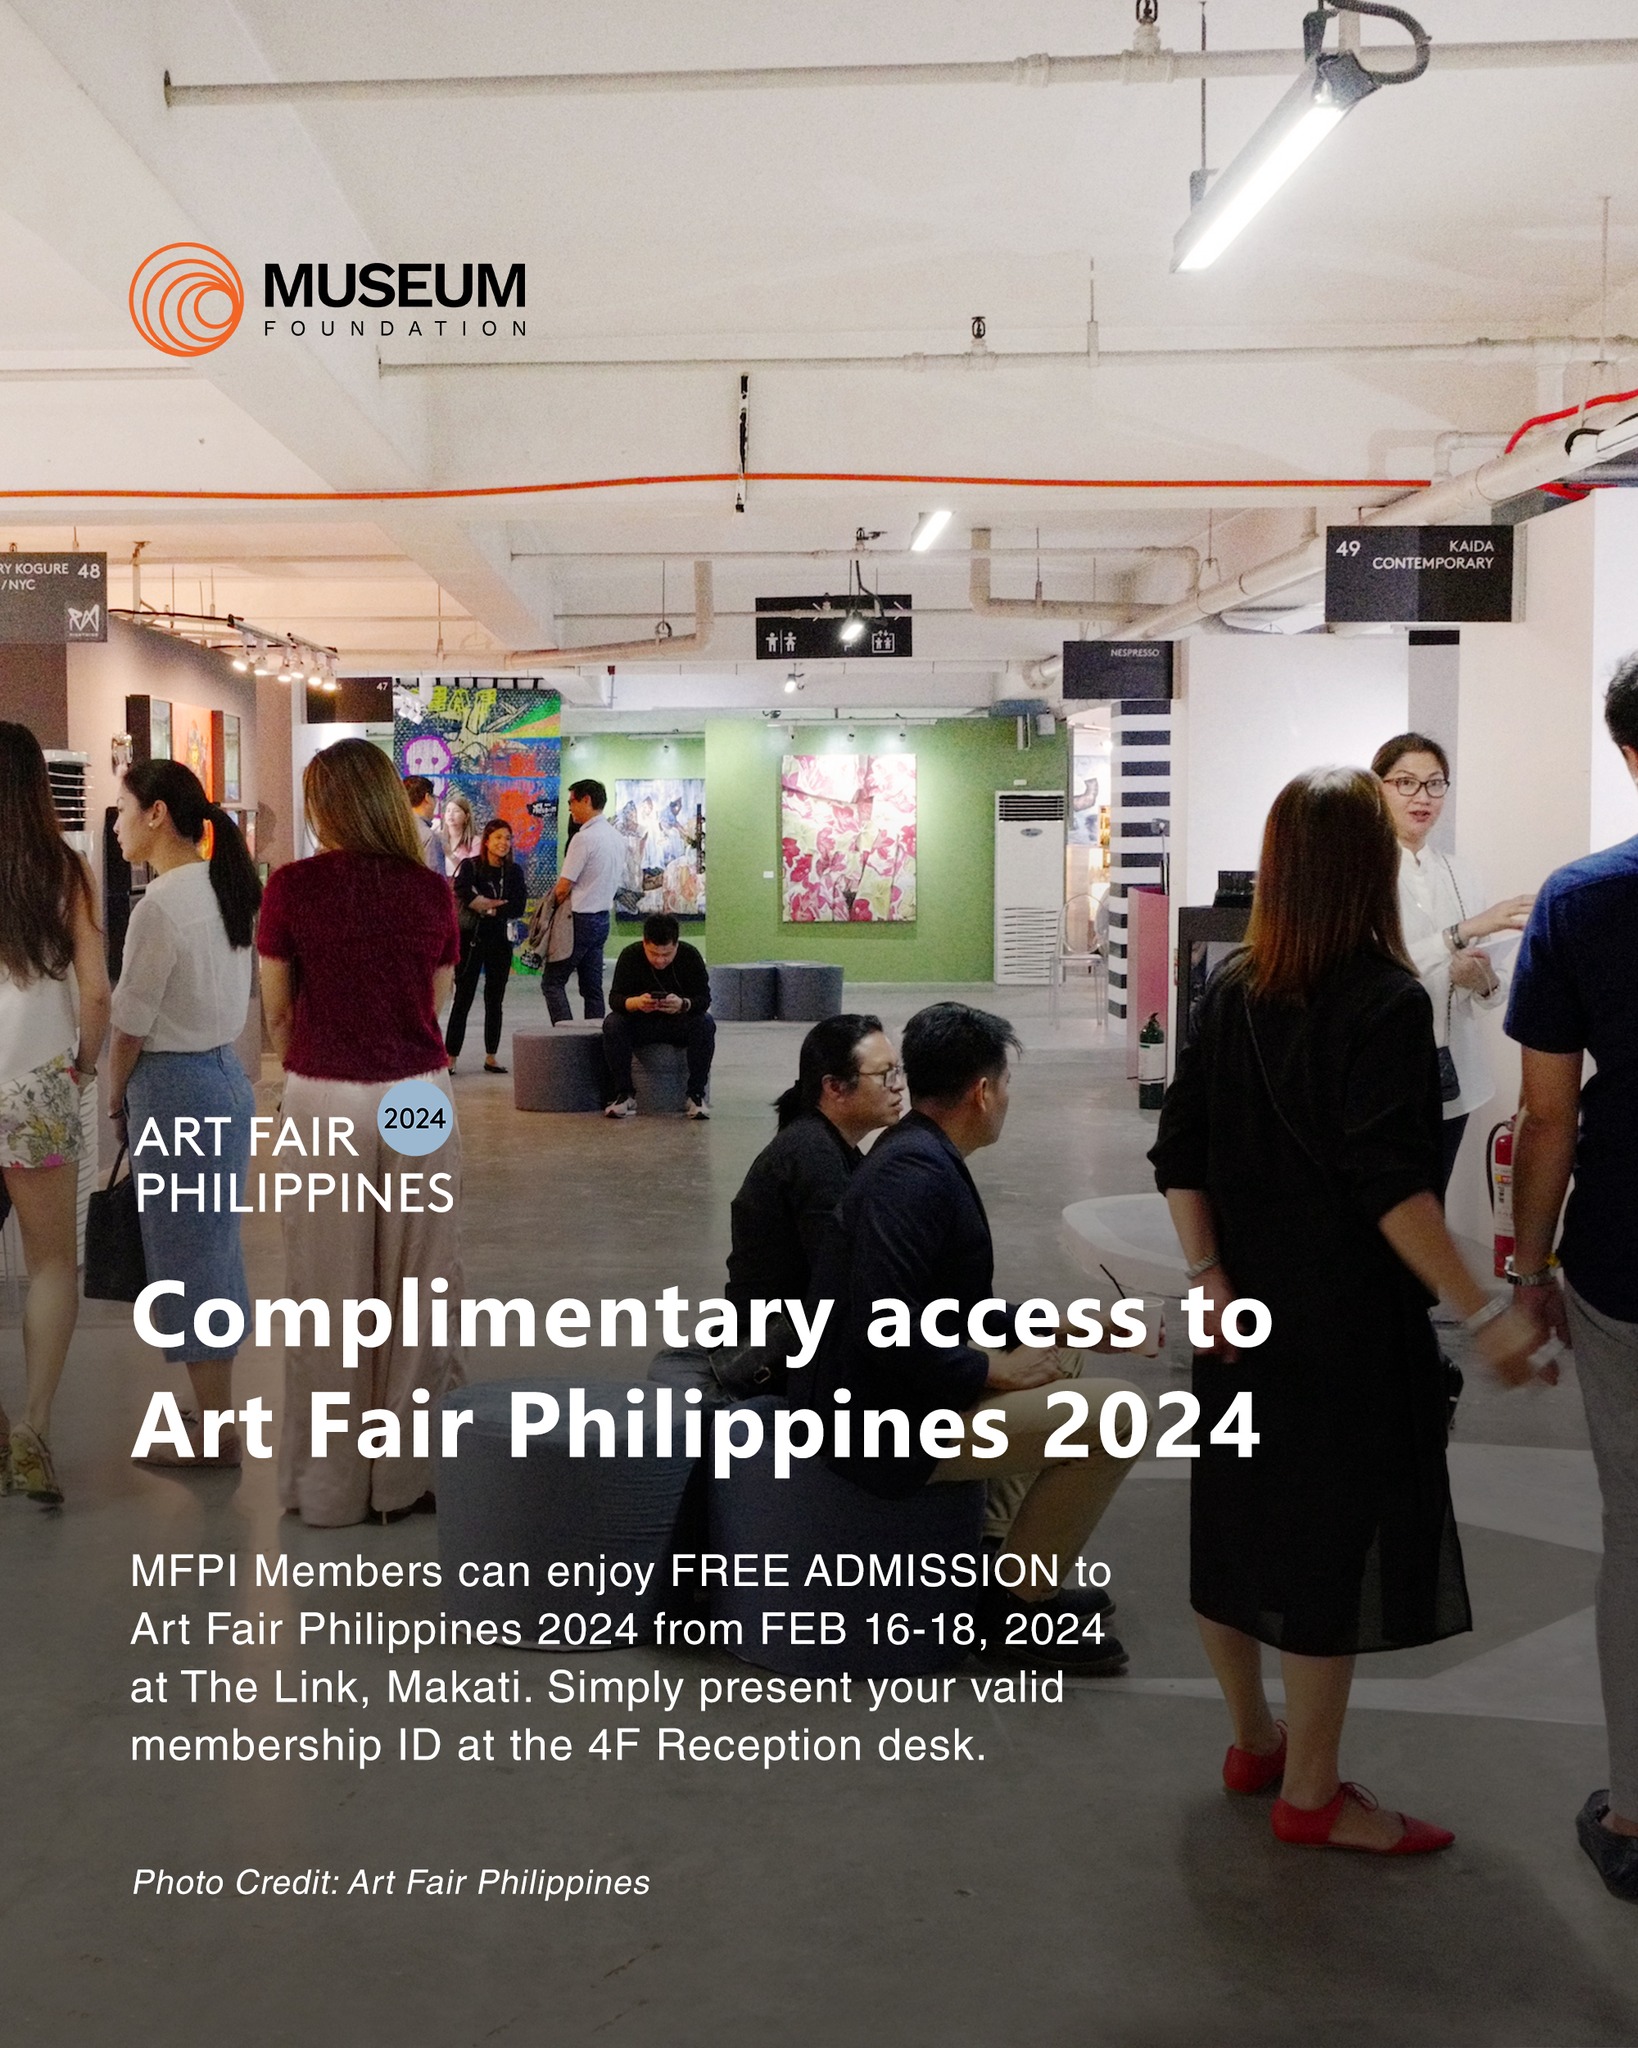 FREE ADMISSION to Art Fair Philippines 2024